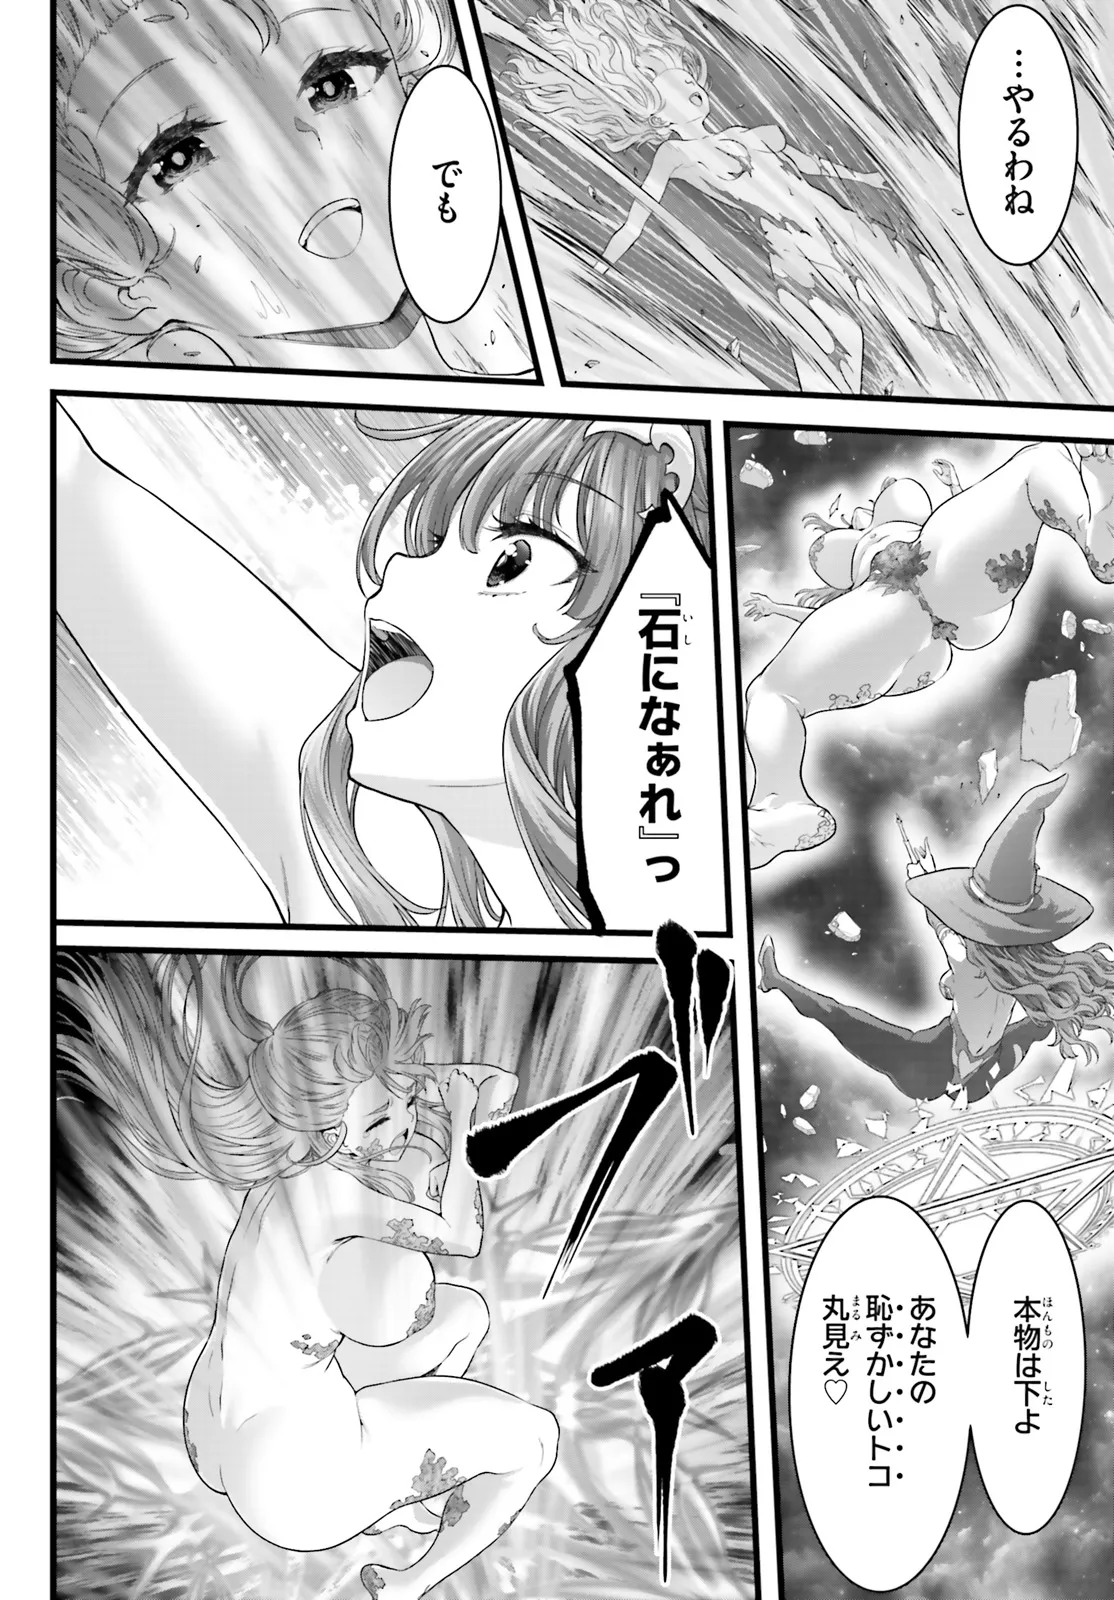 Megami Haiboku Tensei no Varanova - Chapter 13.2 - Page 2